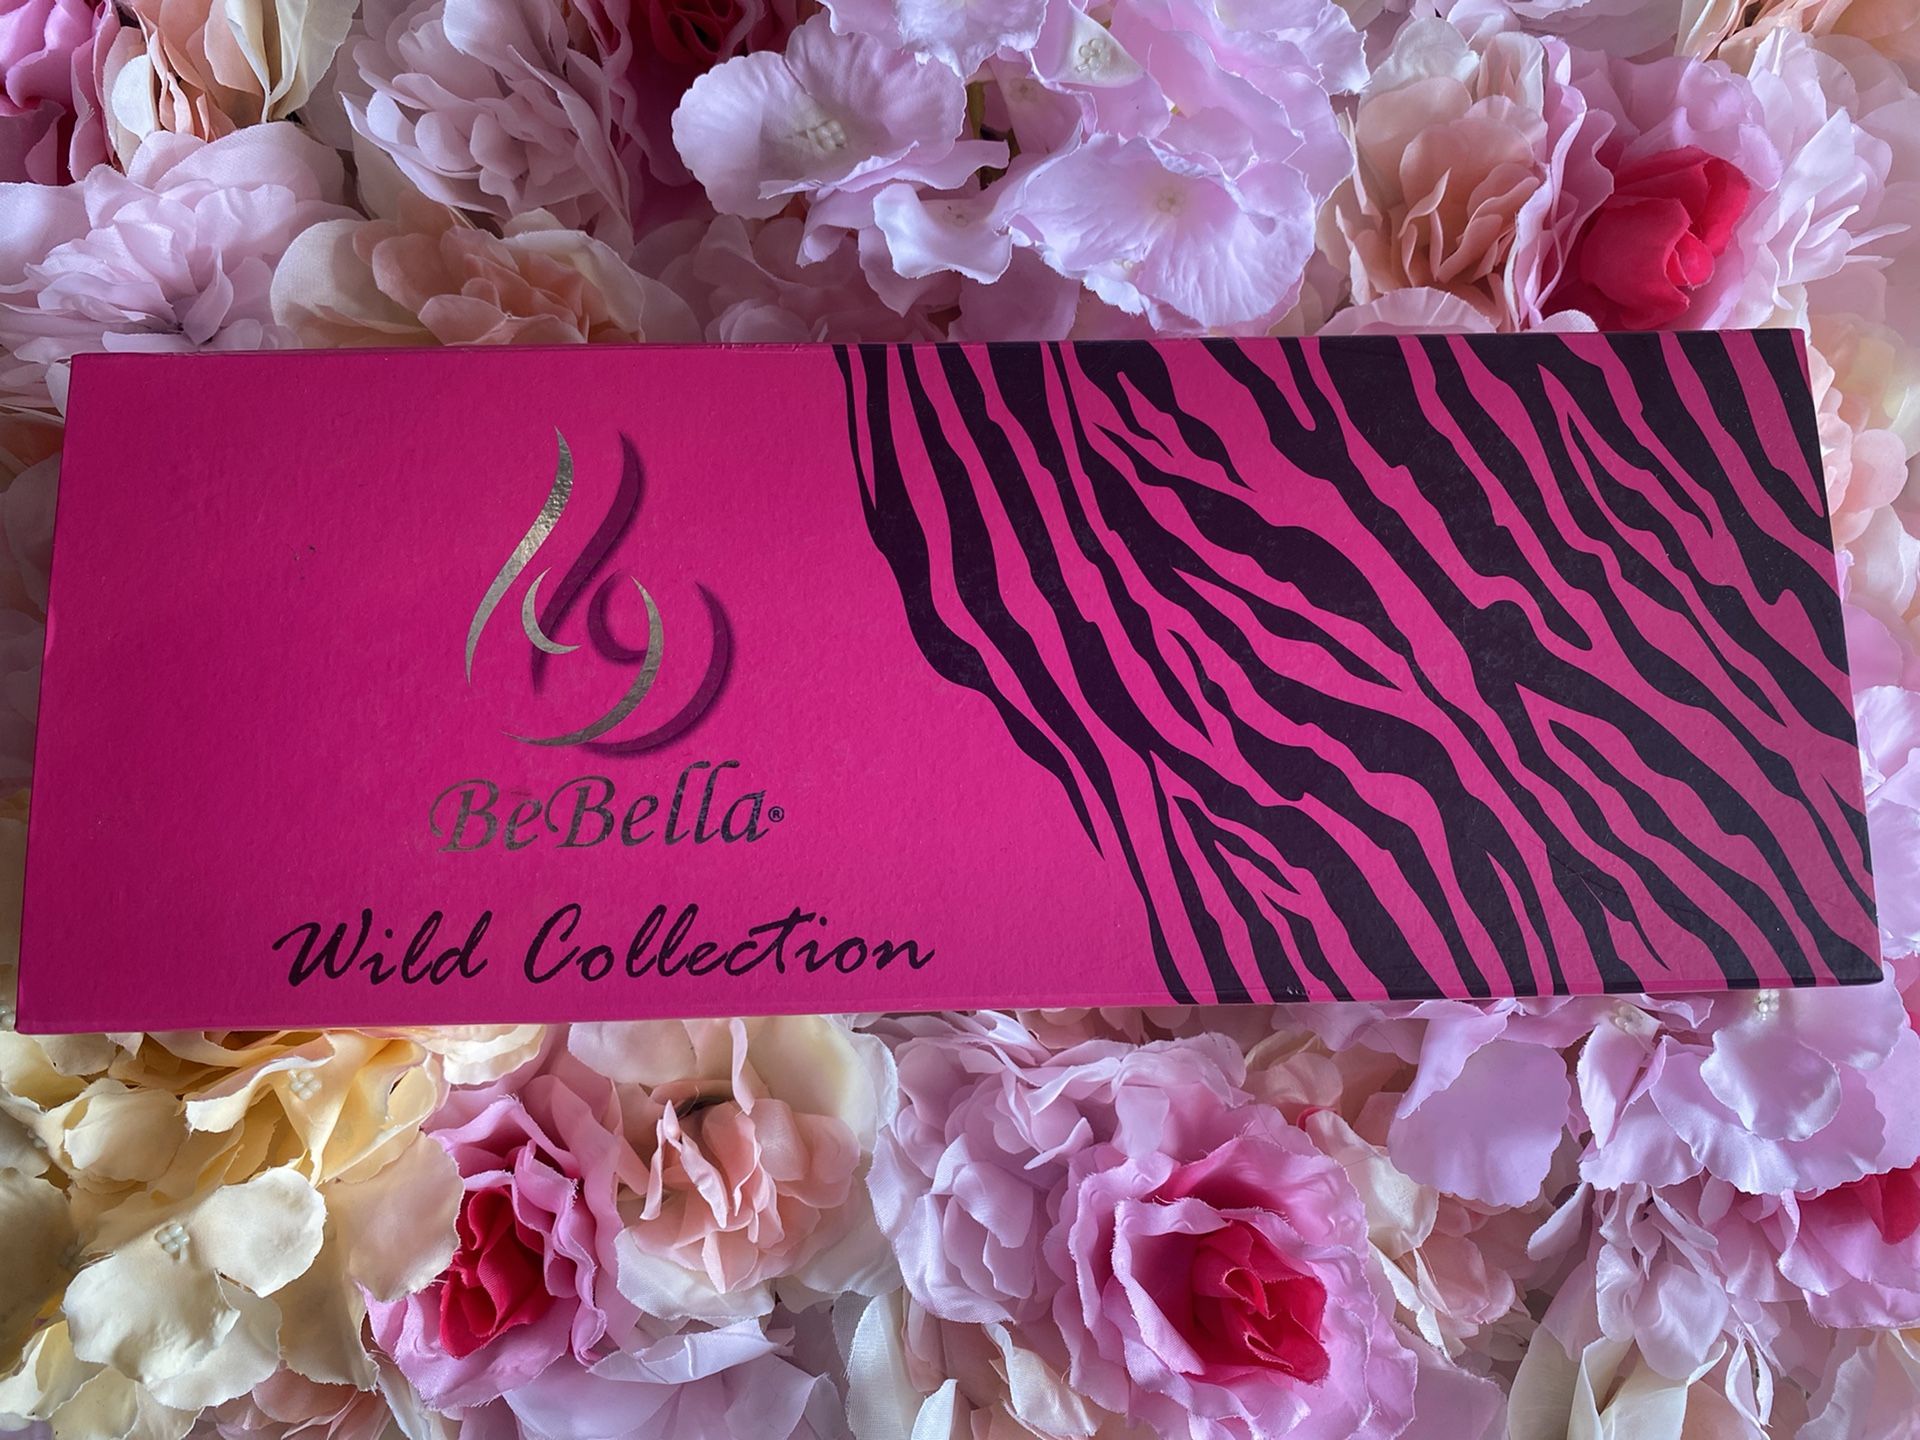 BeBella Wild Collection